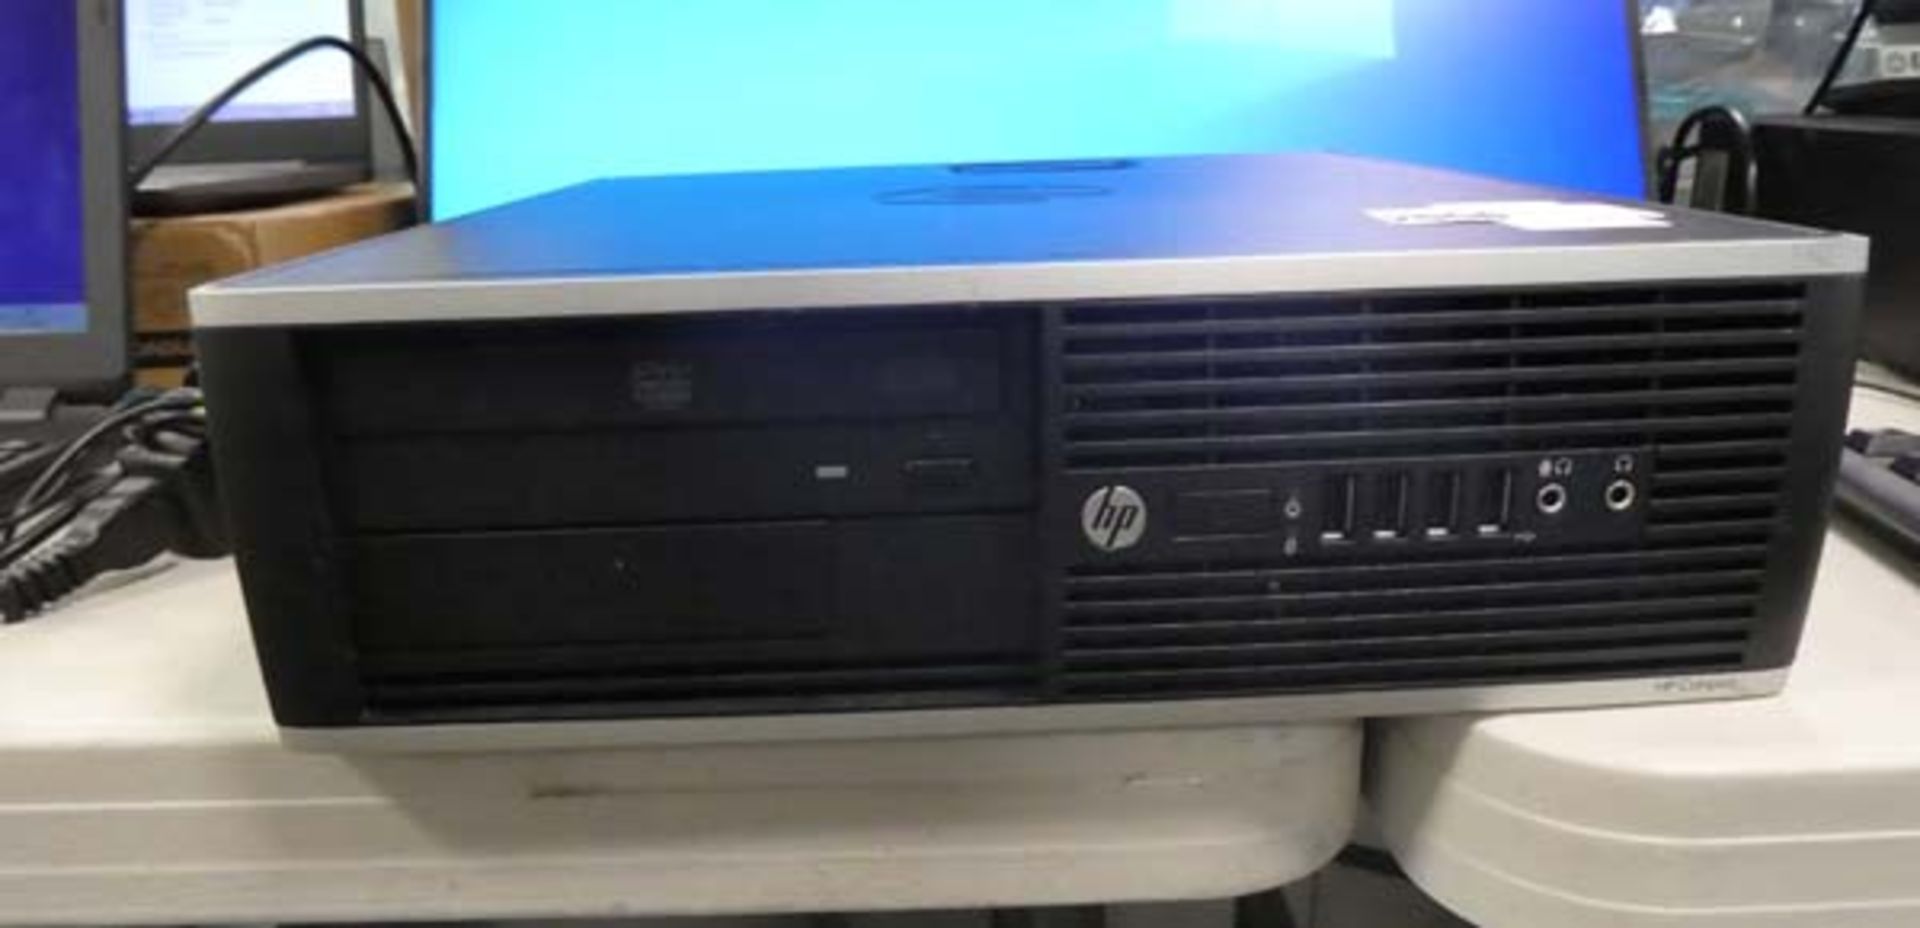 HP Compact Pro 6305 desktop computer AMD A4 processor, 4gb ram, 256gb storage, Windows 10 installed